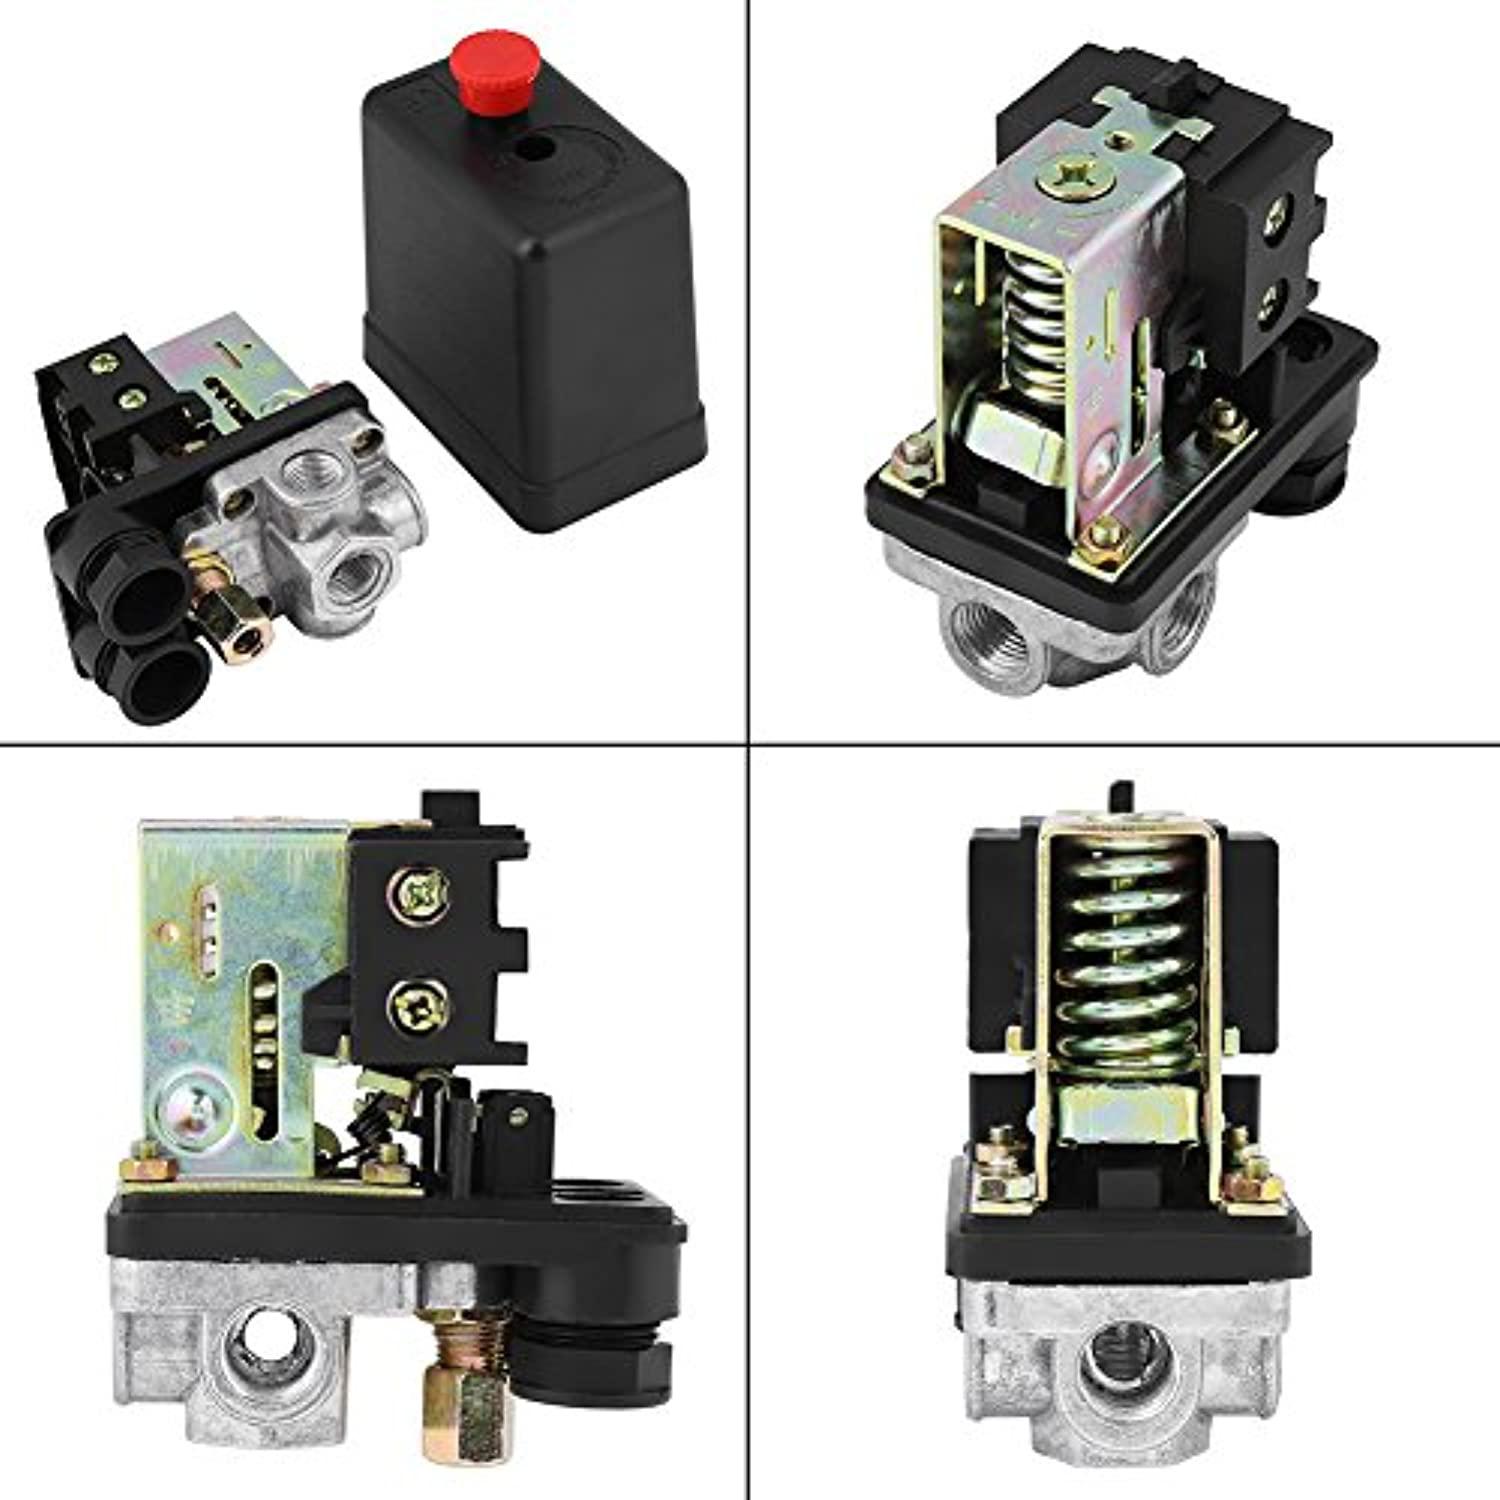 roadiress four port air compressor pressure switch, heavy duty 240v 16a control 90psi -120psi air compressor switch control